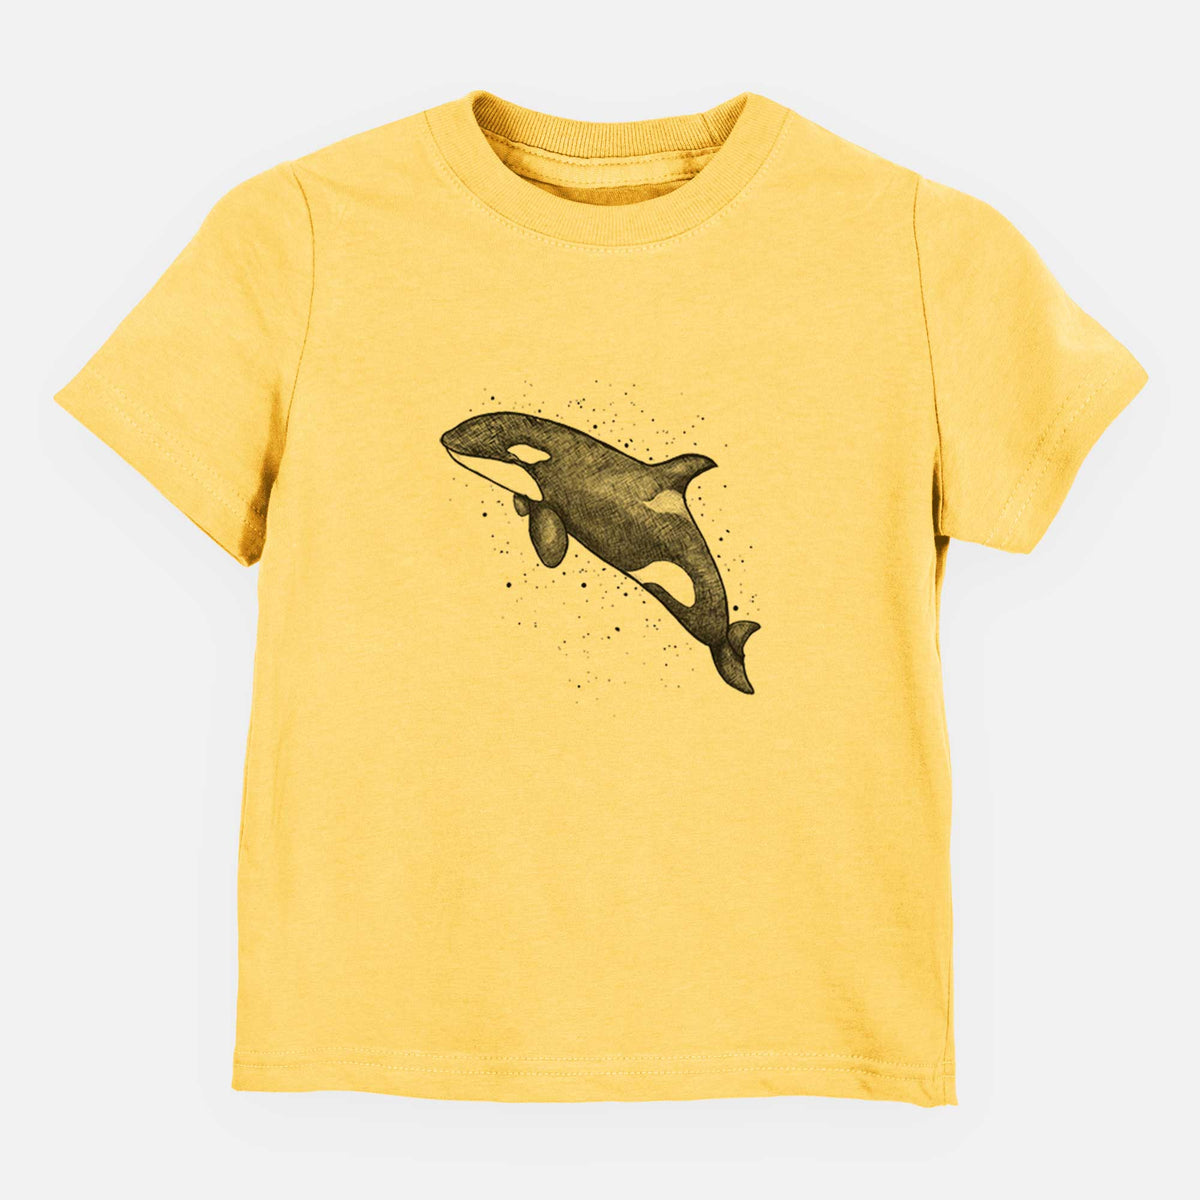 Orca Whale - Kids Shirt